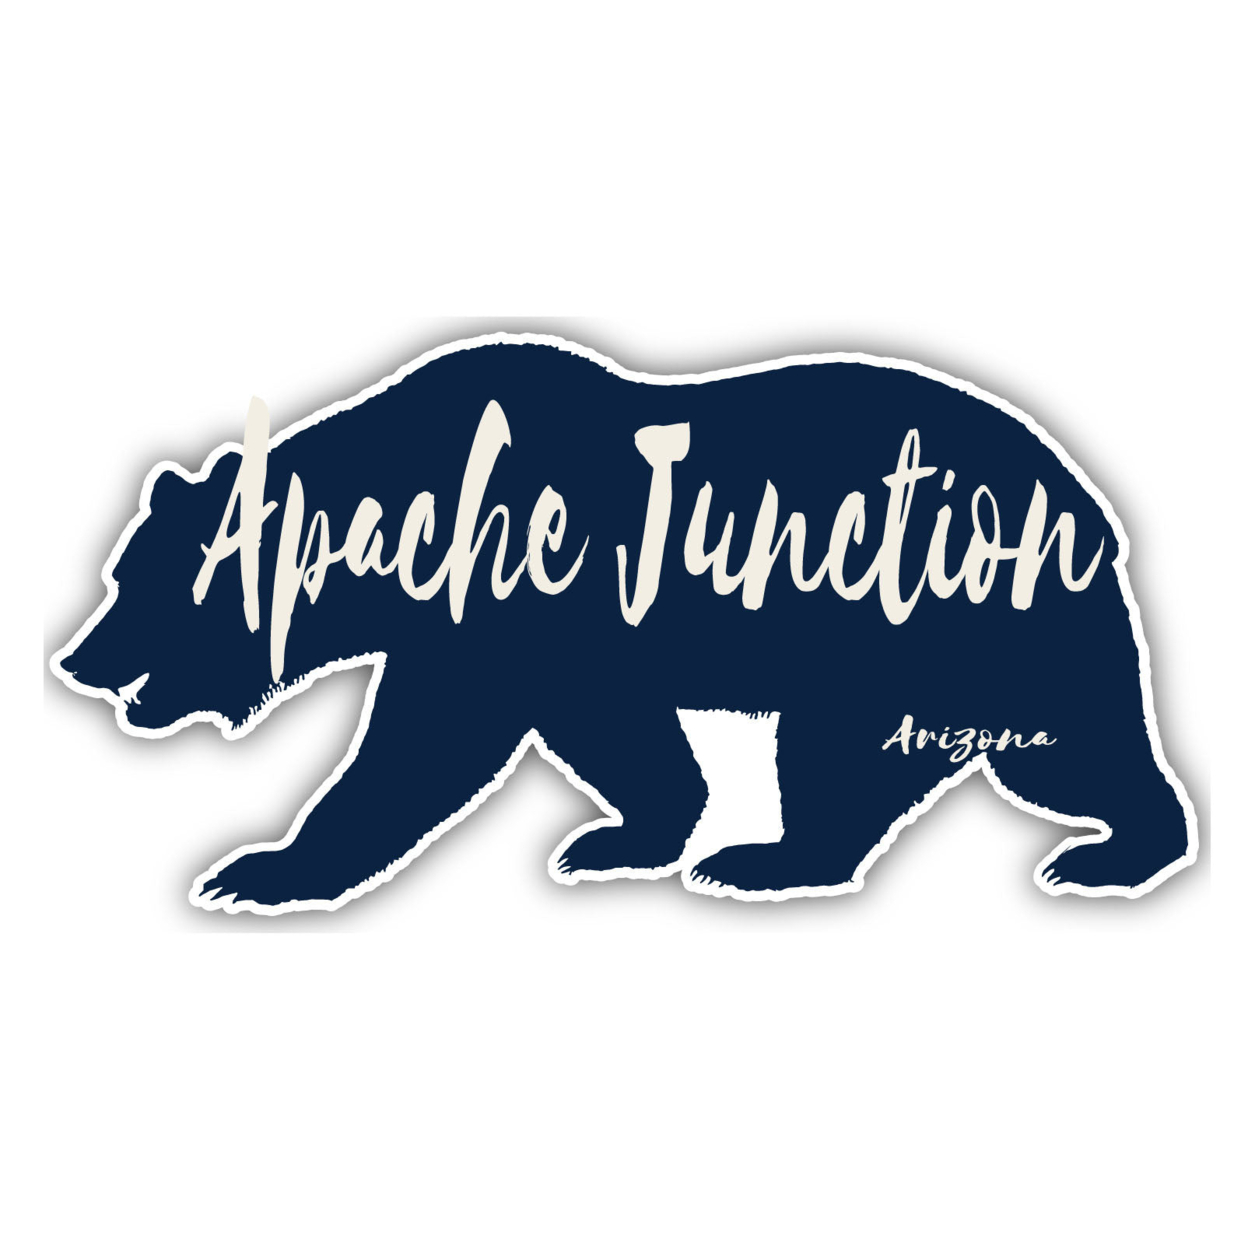 Apache Junction Arizona Souvenir Decorative Stickers (Choose Theme And Size) - 4-Pack, 12-Inch, Bear